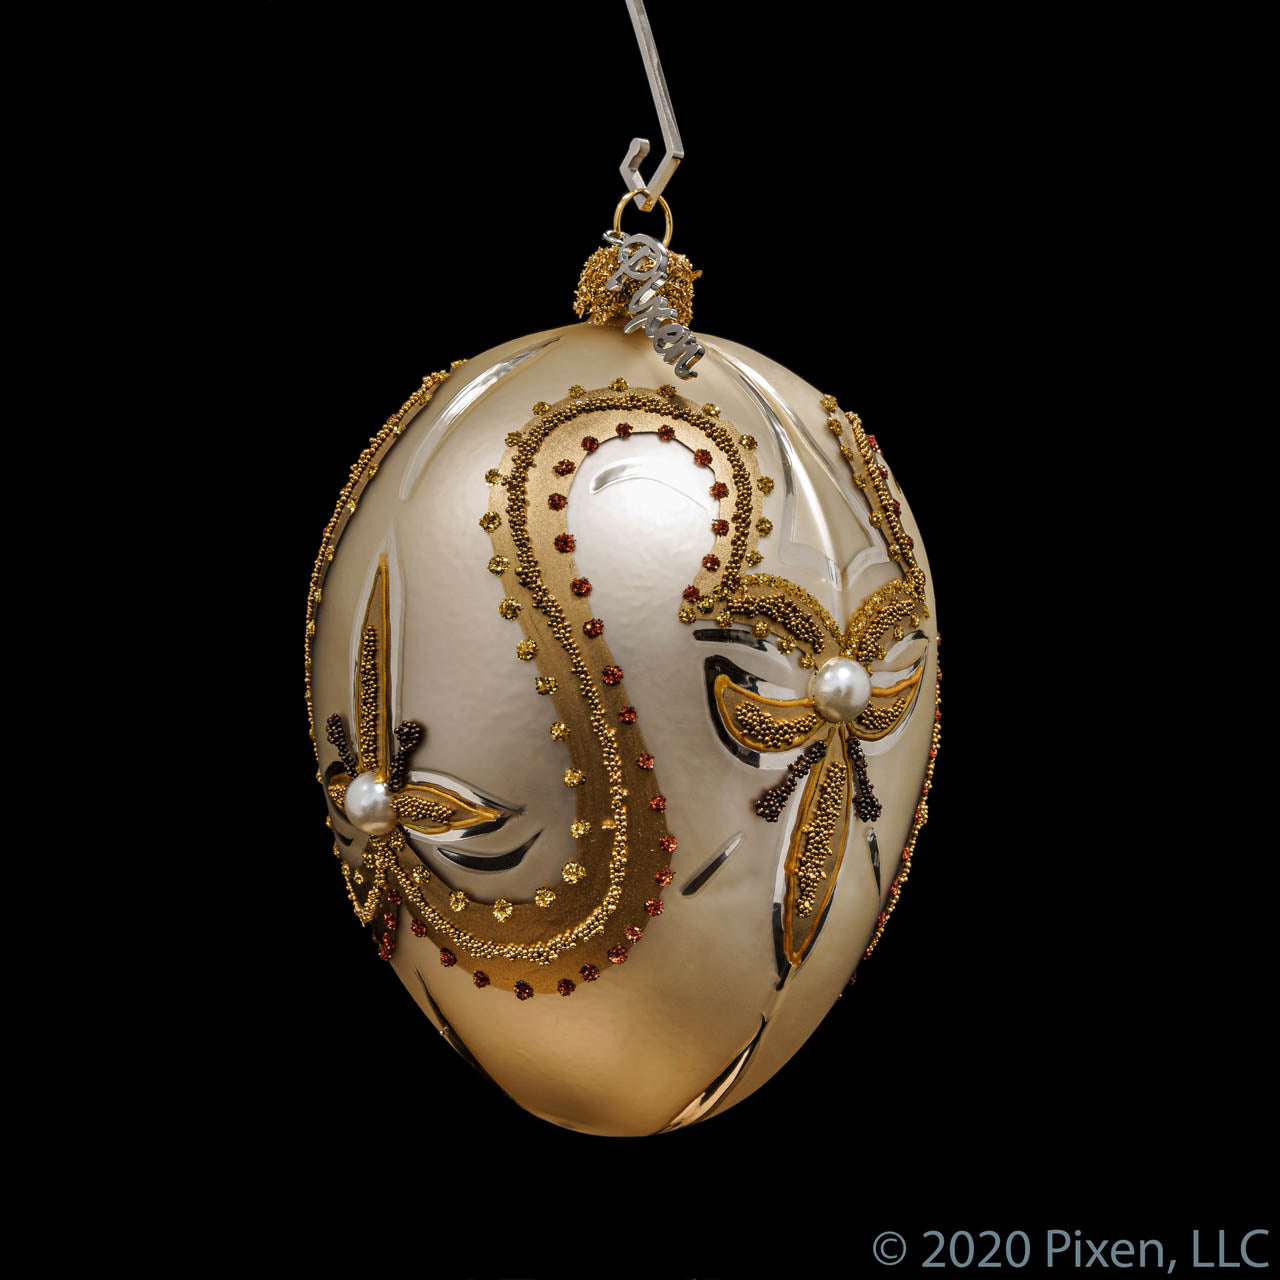 Conundrum Egg Christmas ornament by Pixen